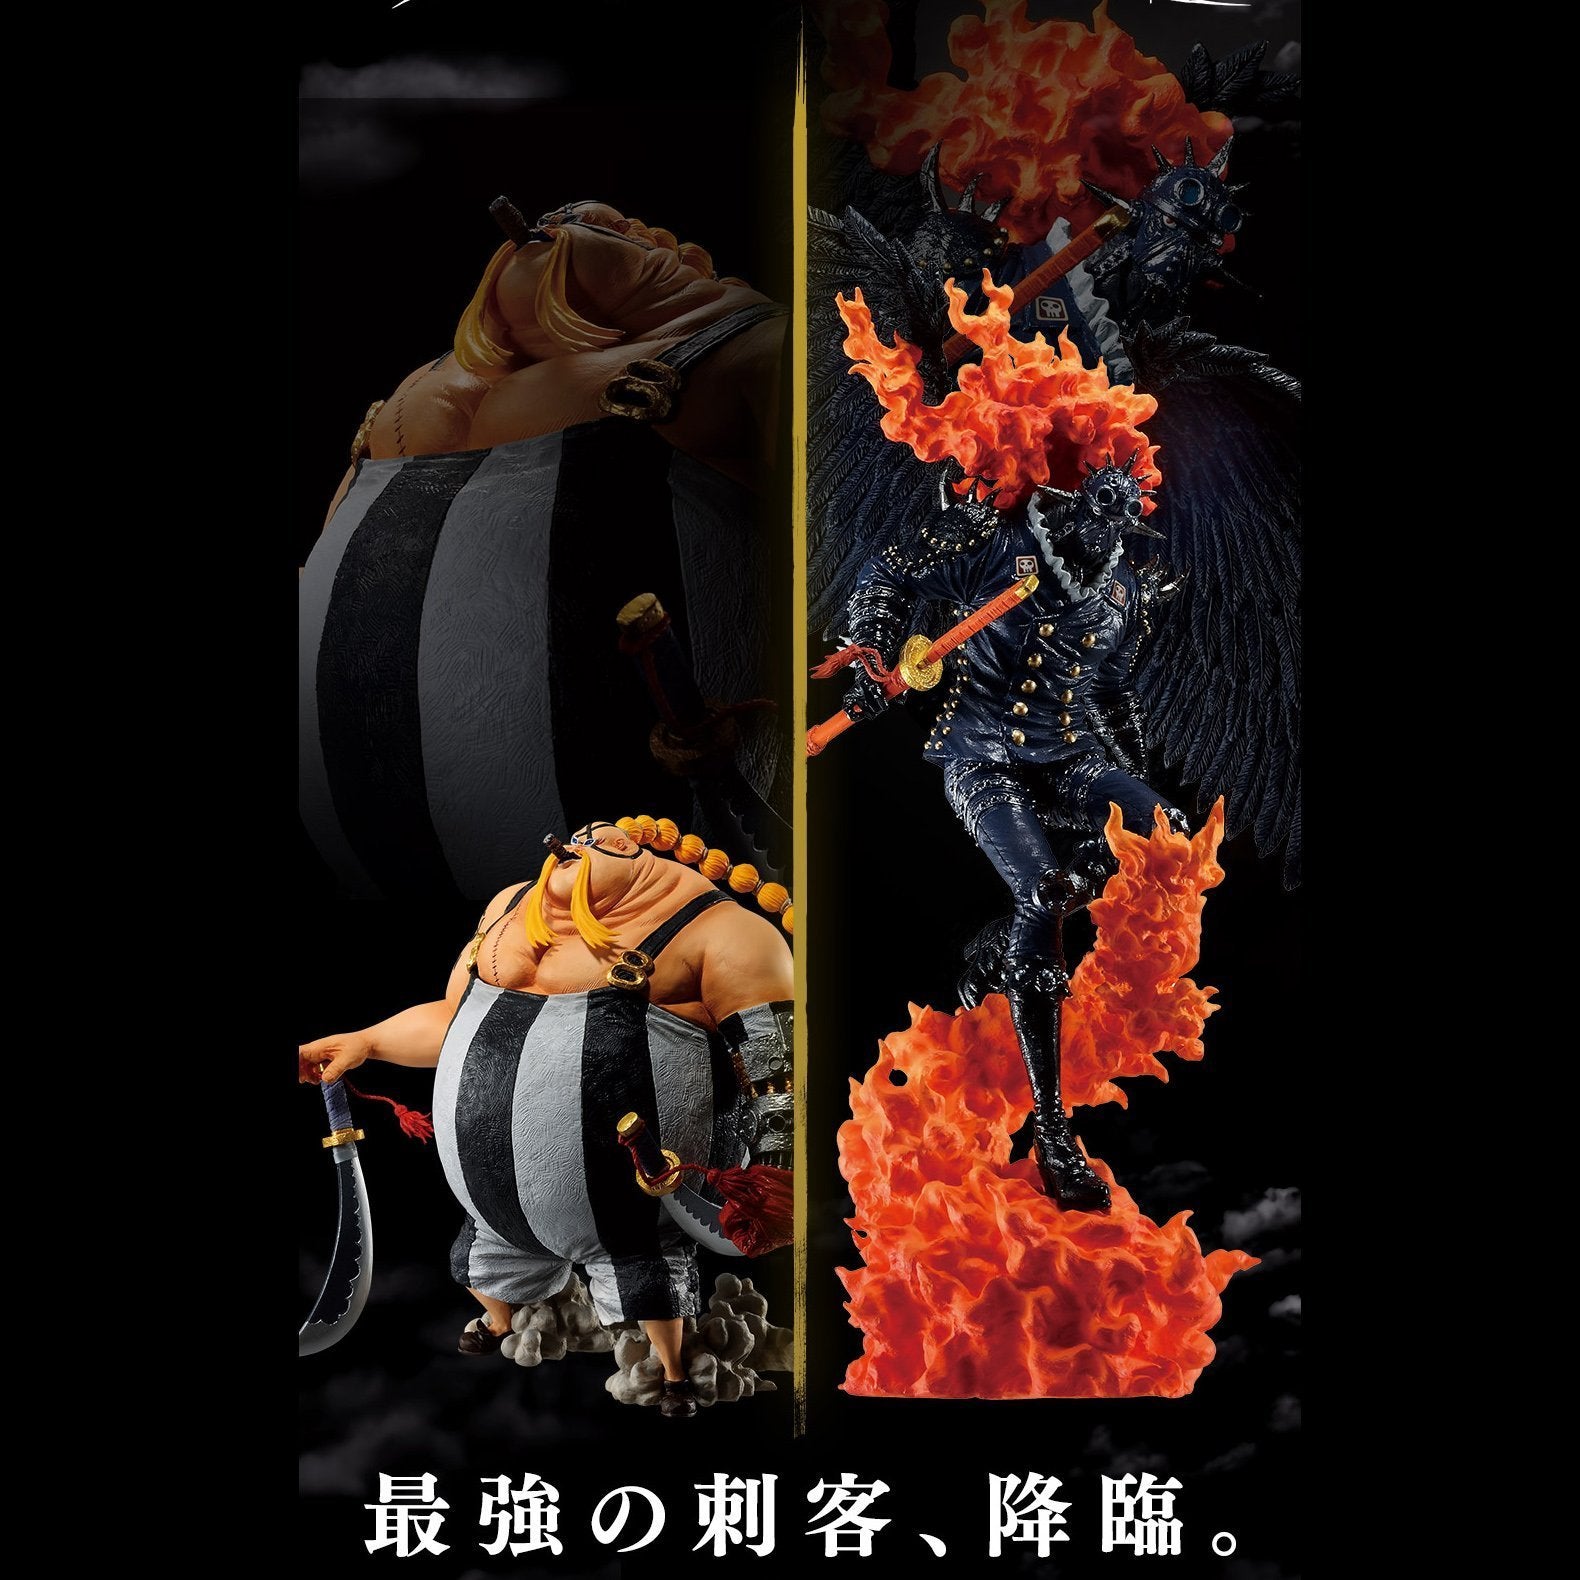 BT Studio One Piece Celestial Dragons and Kuma